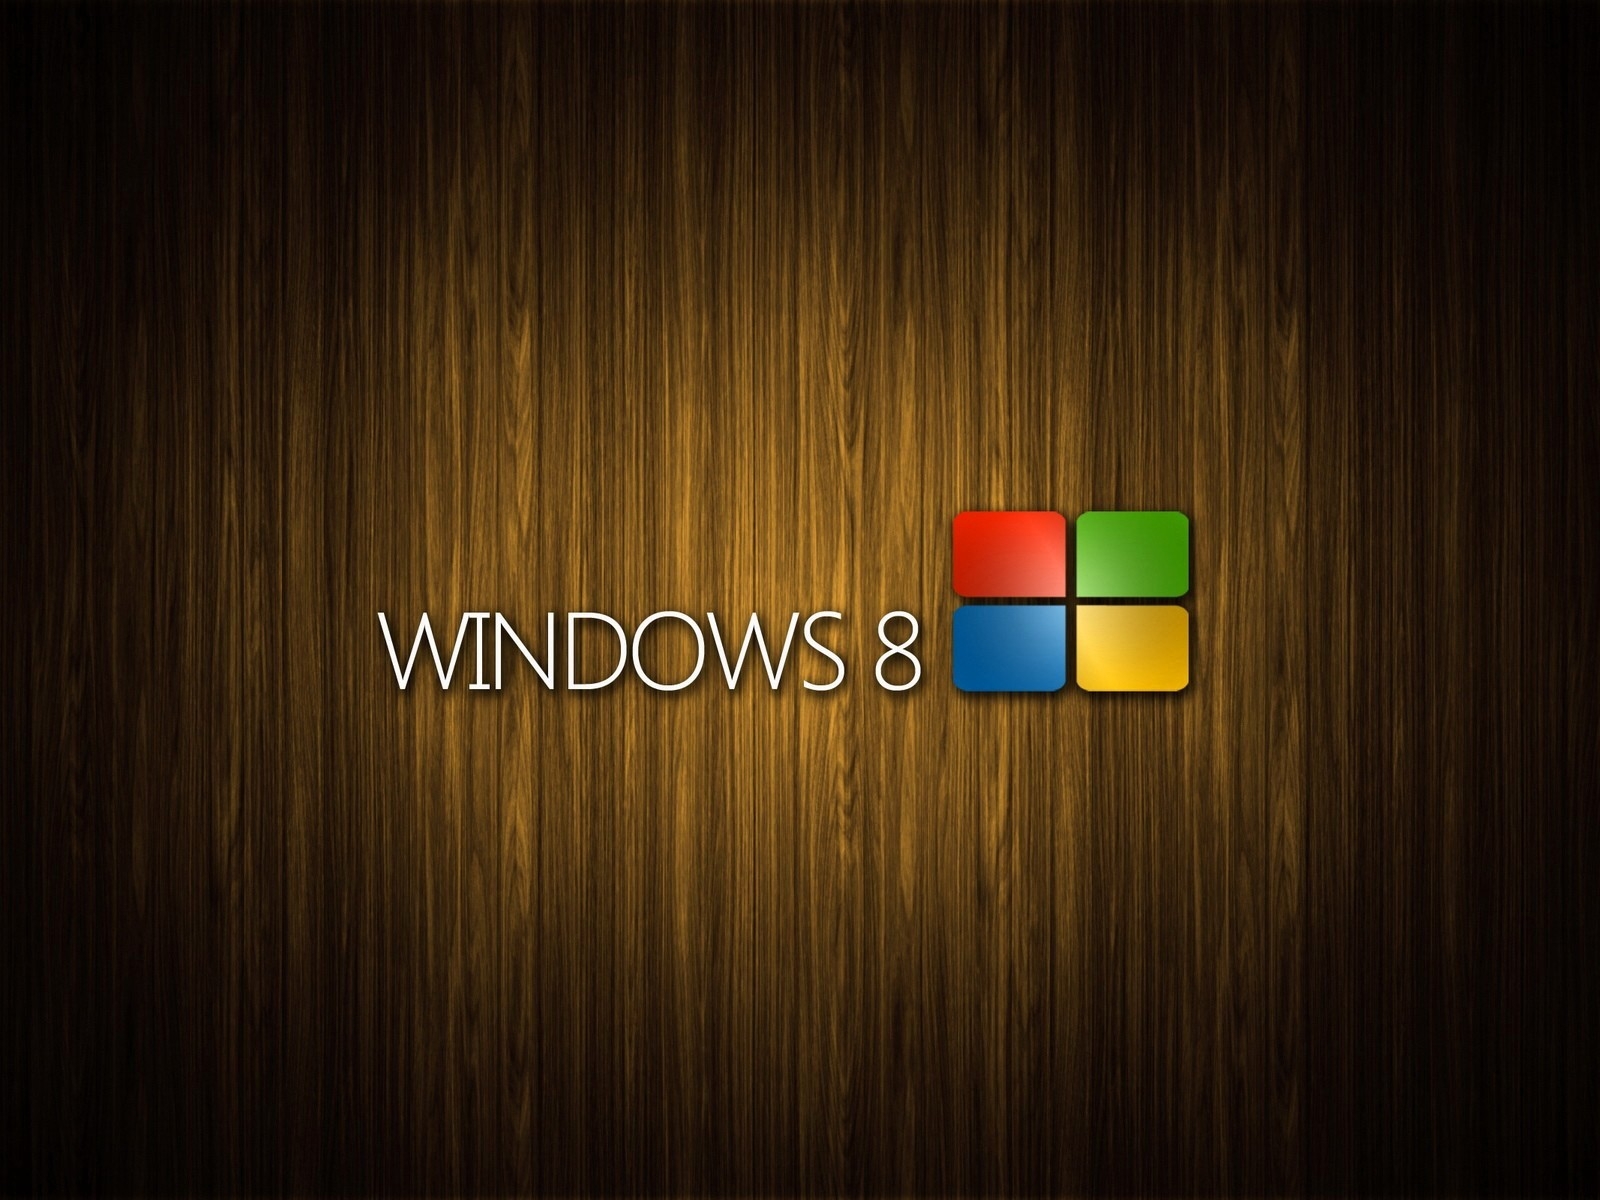 Microsoft Windows 8 Logo for 1600 x 1200 resolution